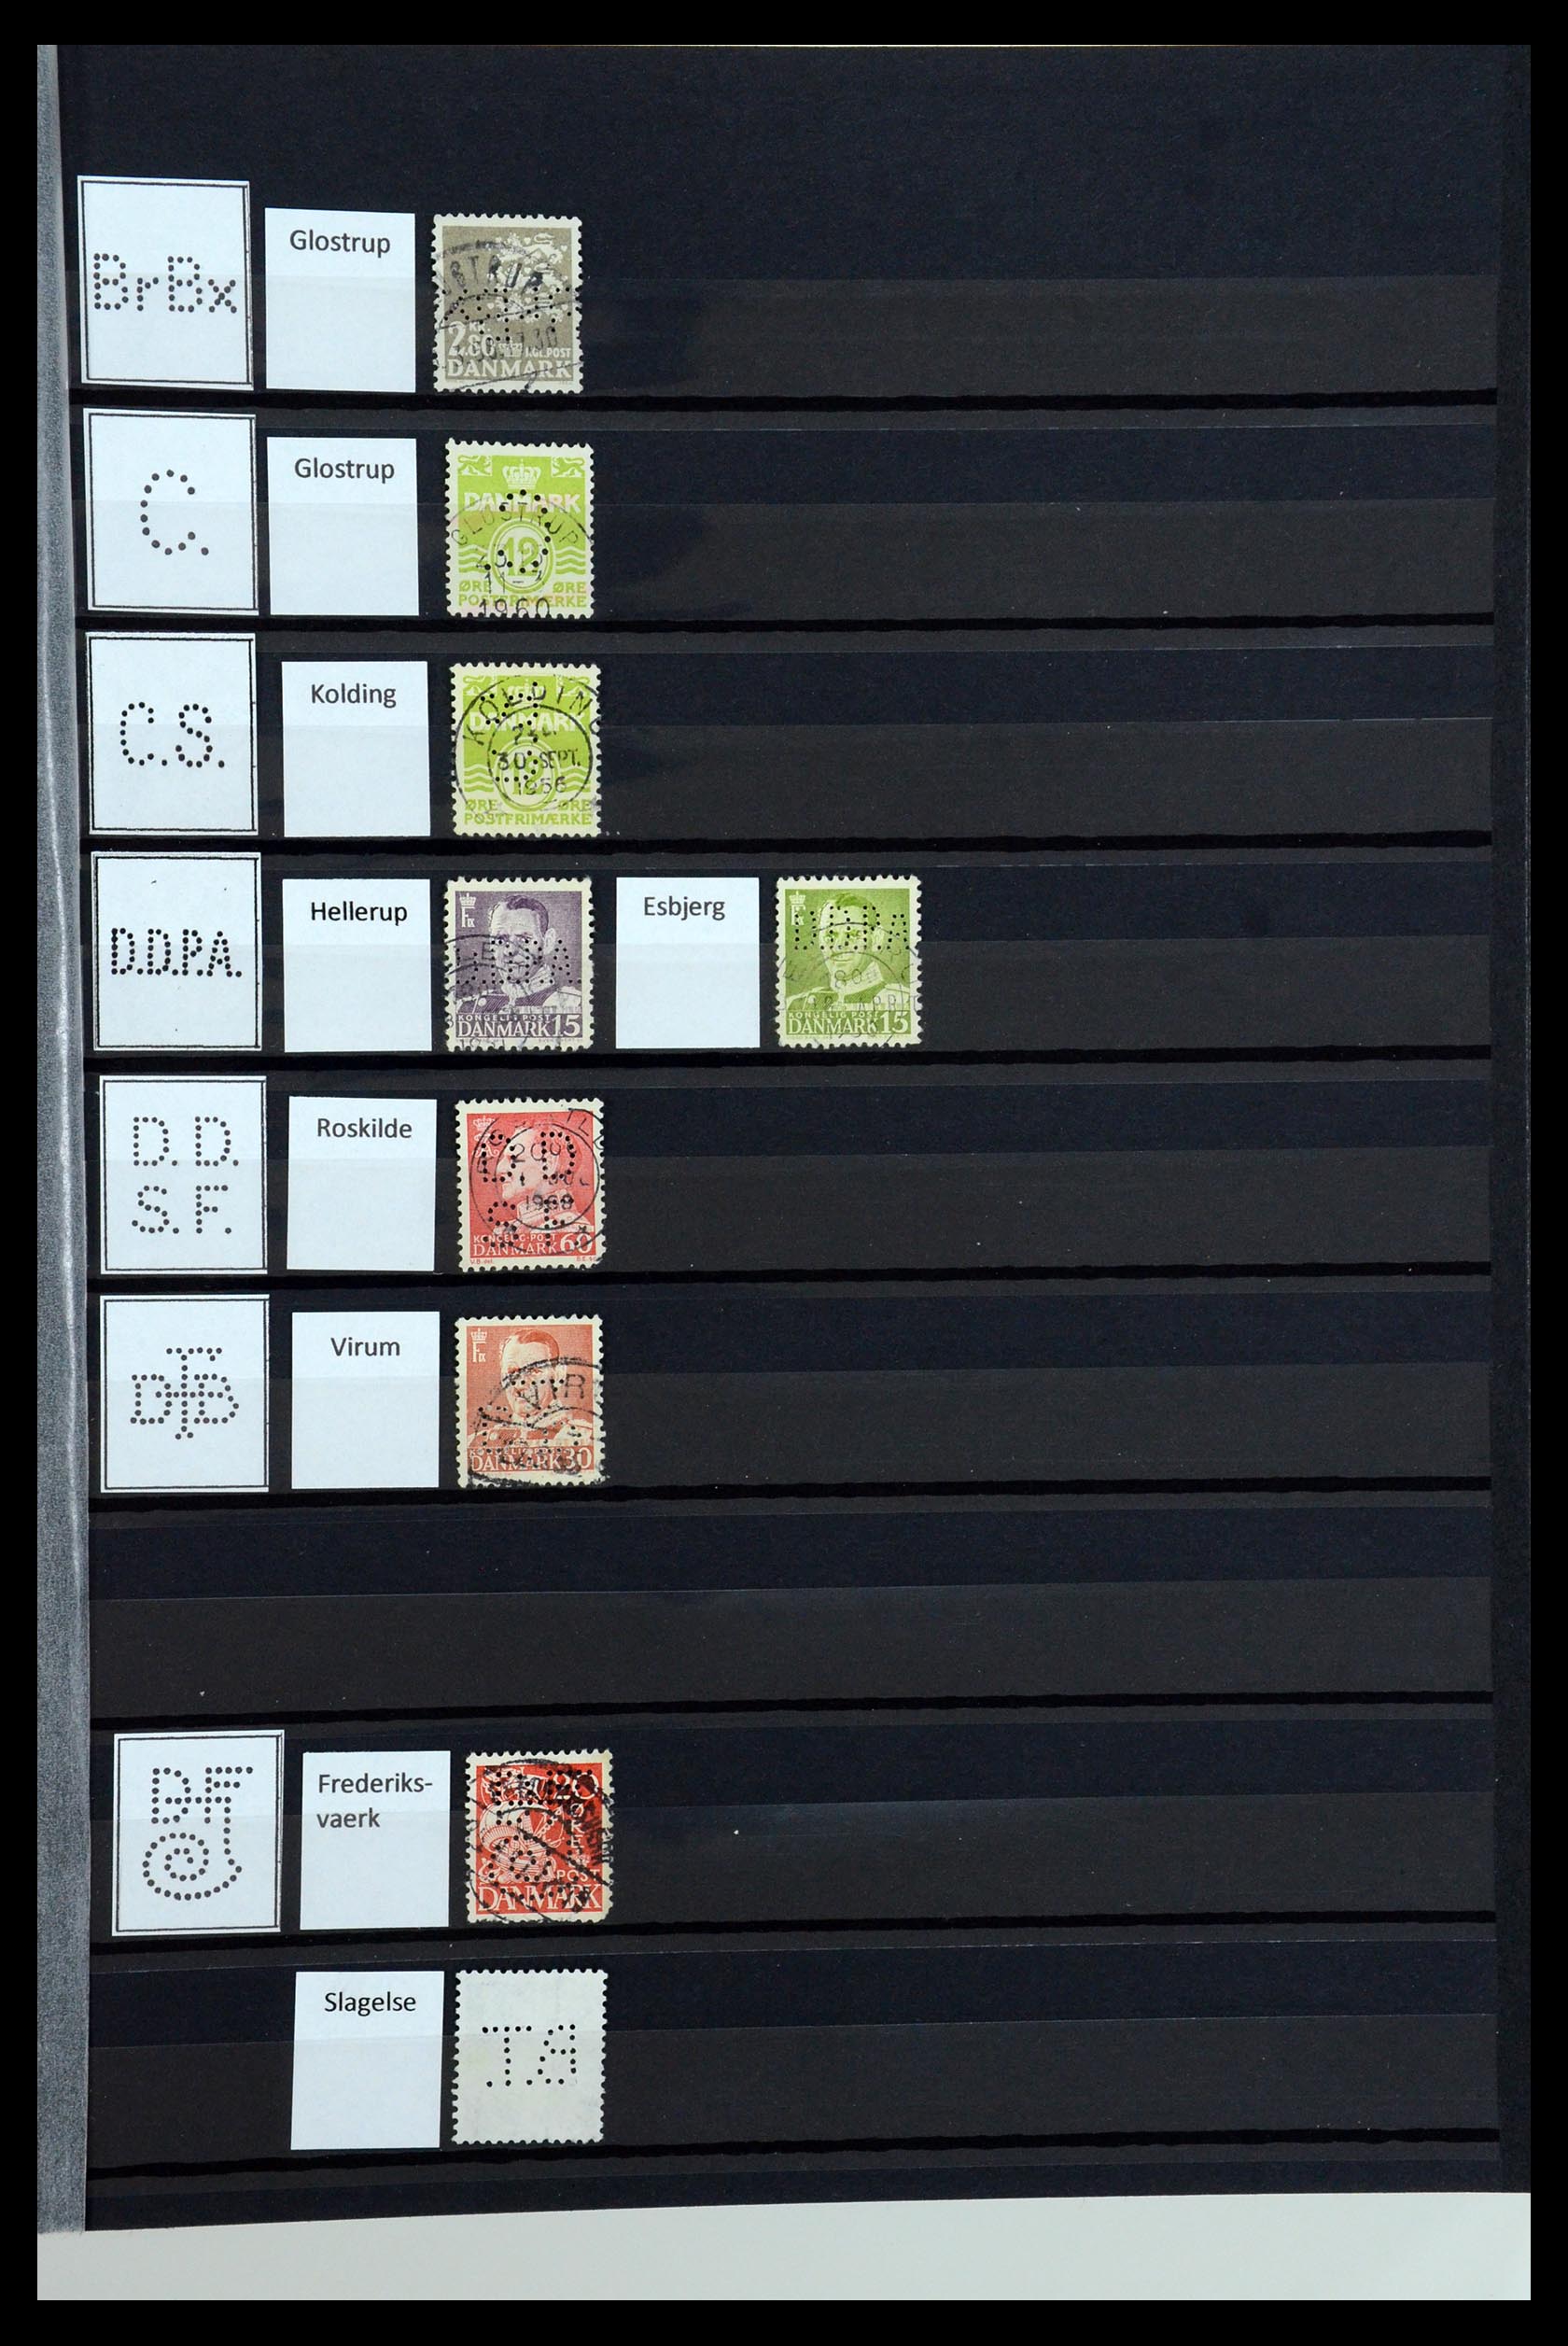 36396 062 - Stamp collection 36396 Denmark perfins.